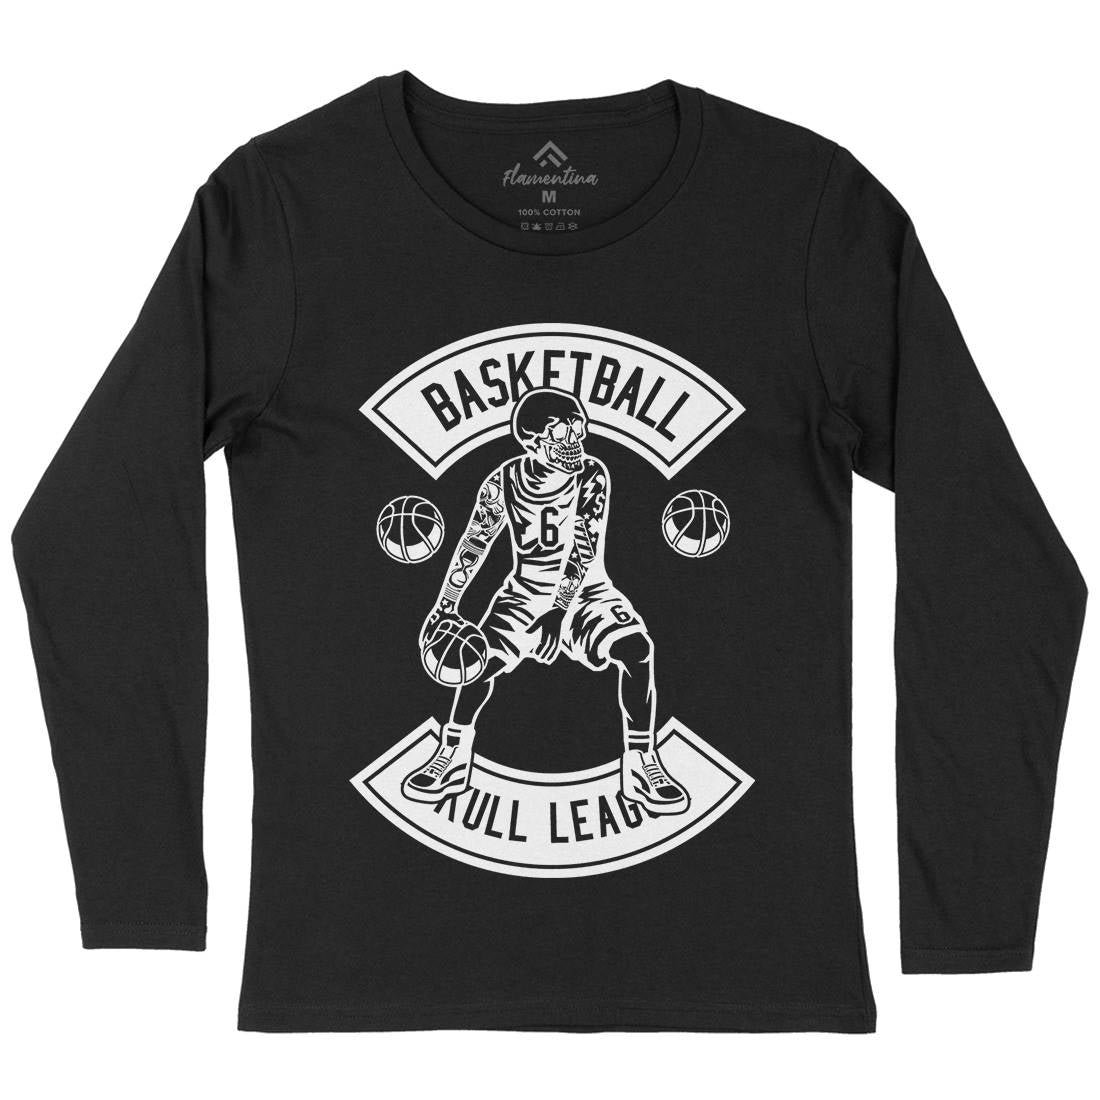 Dribble Skull Womens Long Sleeve T-Shirt Sport B534